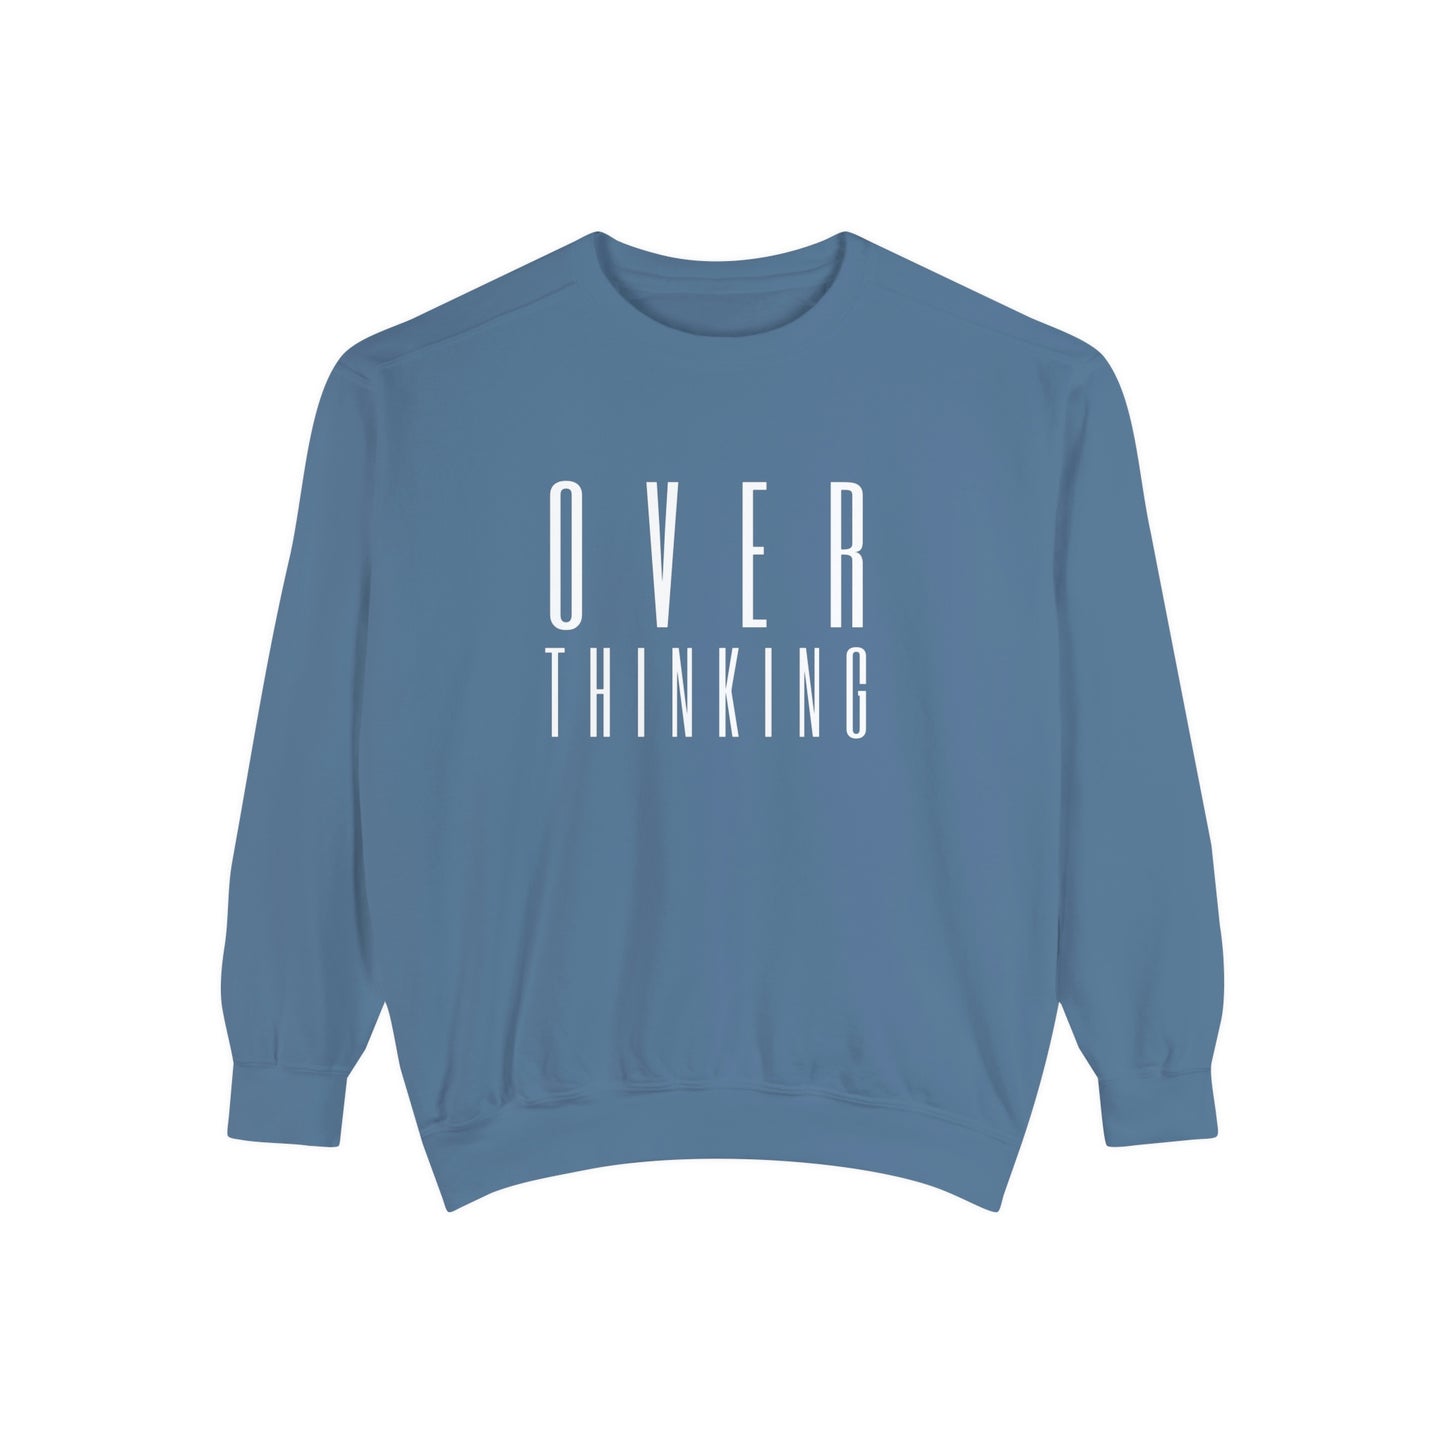 "Over Thinking" Comfort Colors Sweatshirt